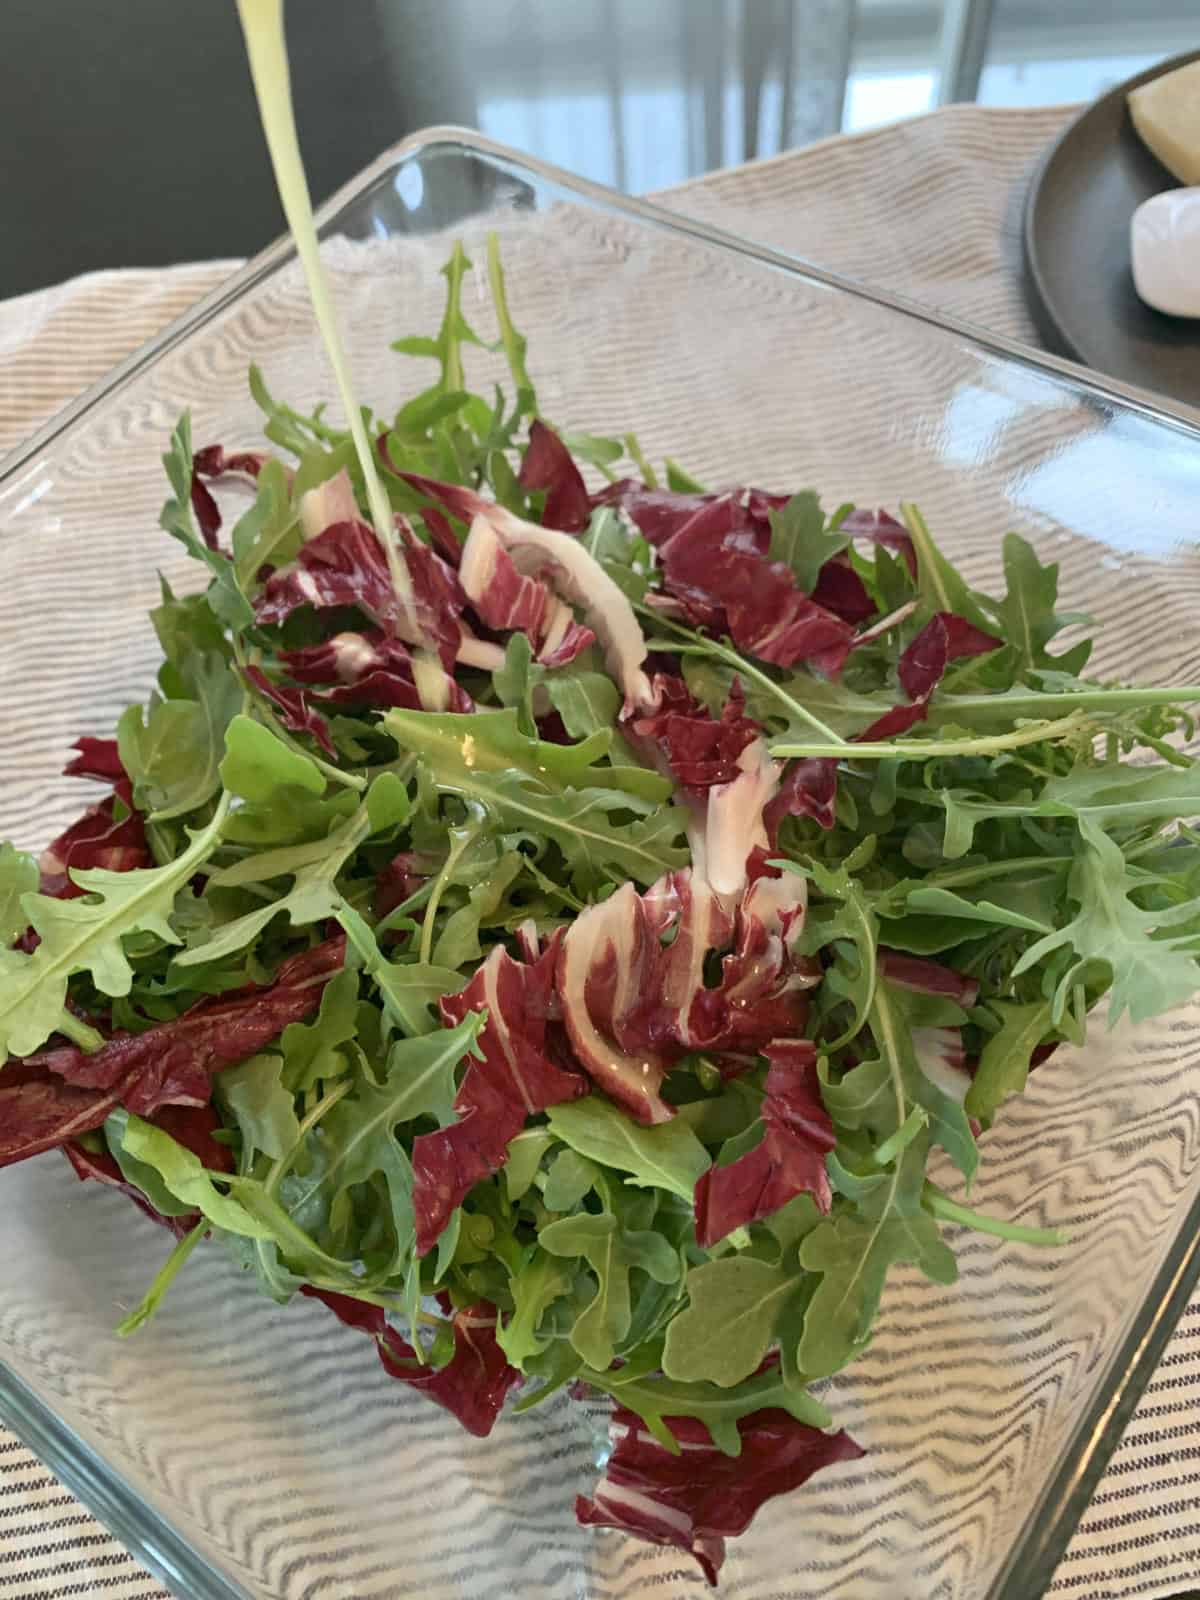 Arugula-and-Radicchio-salad with dressing.